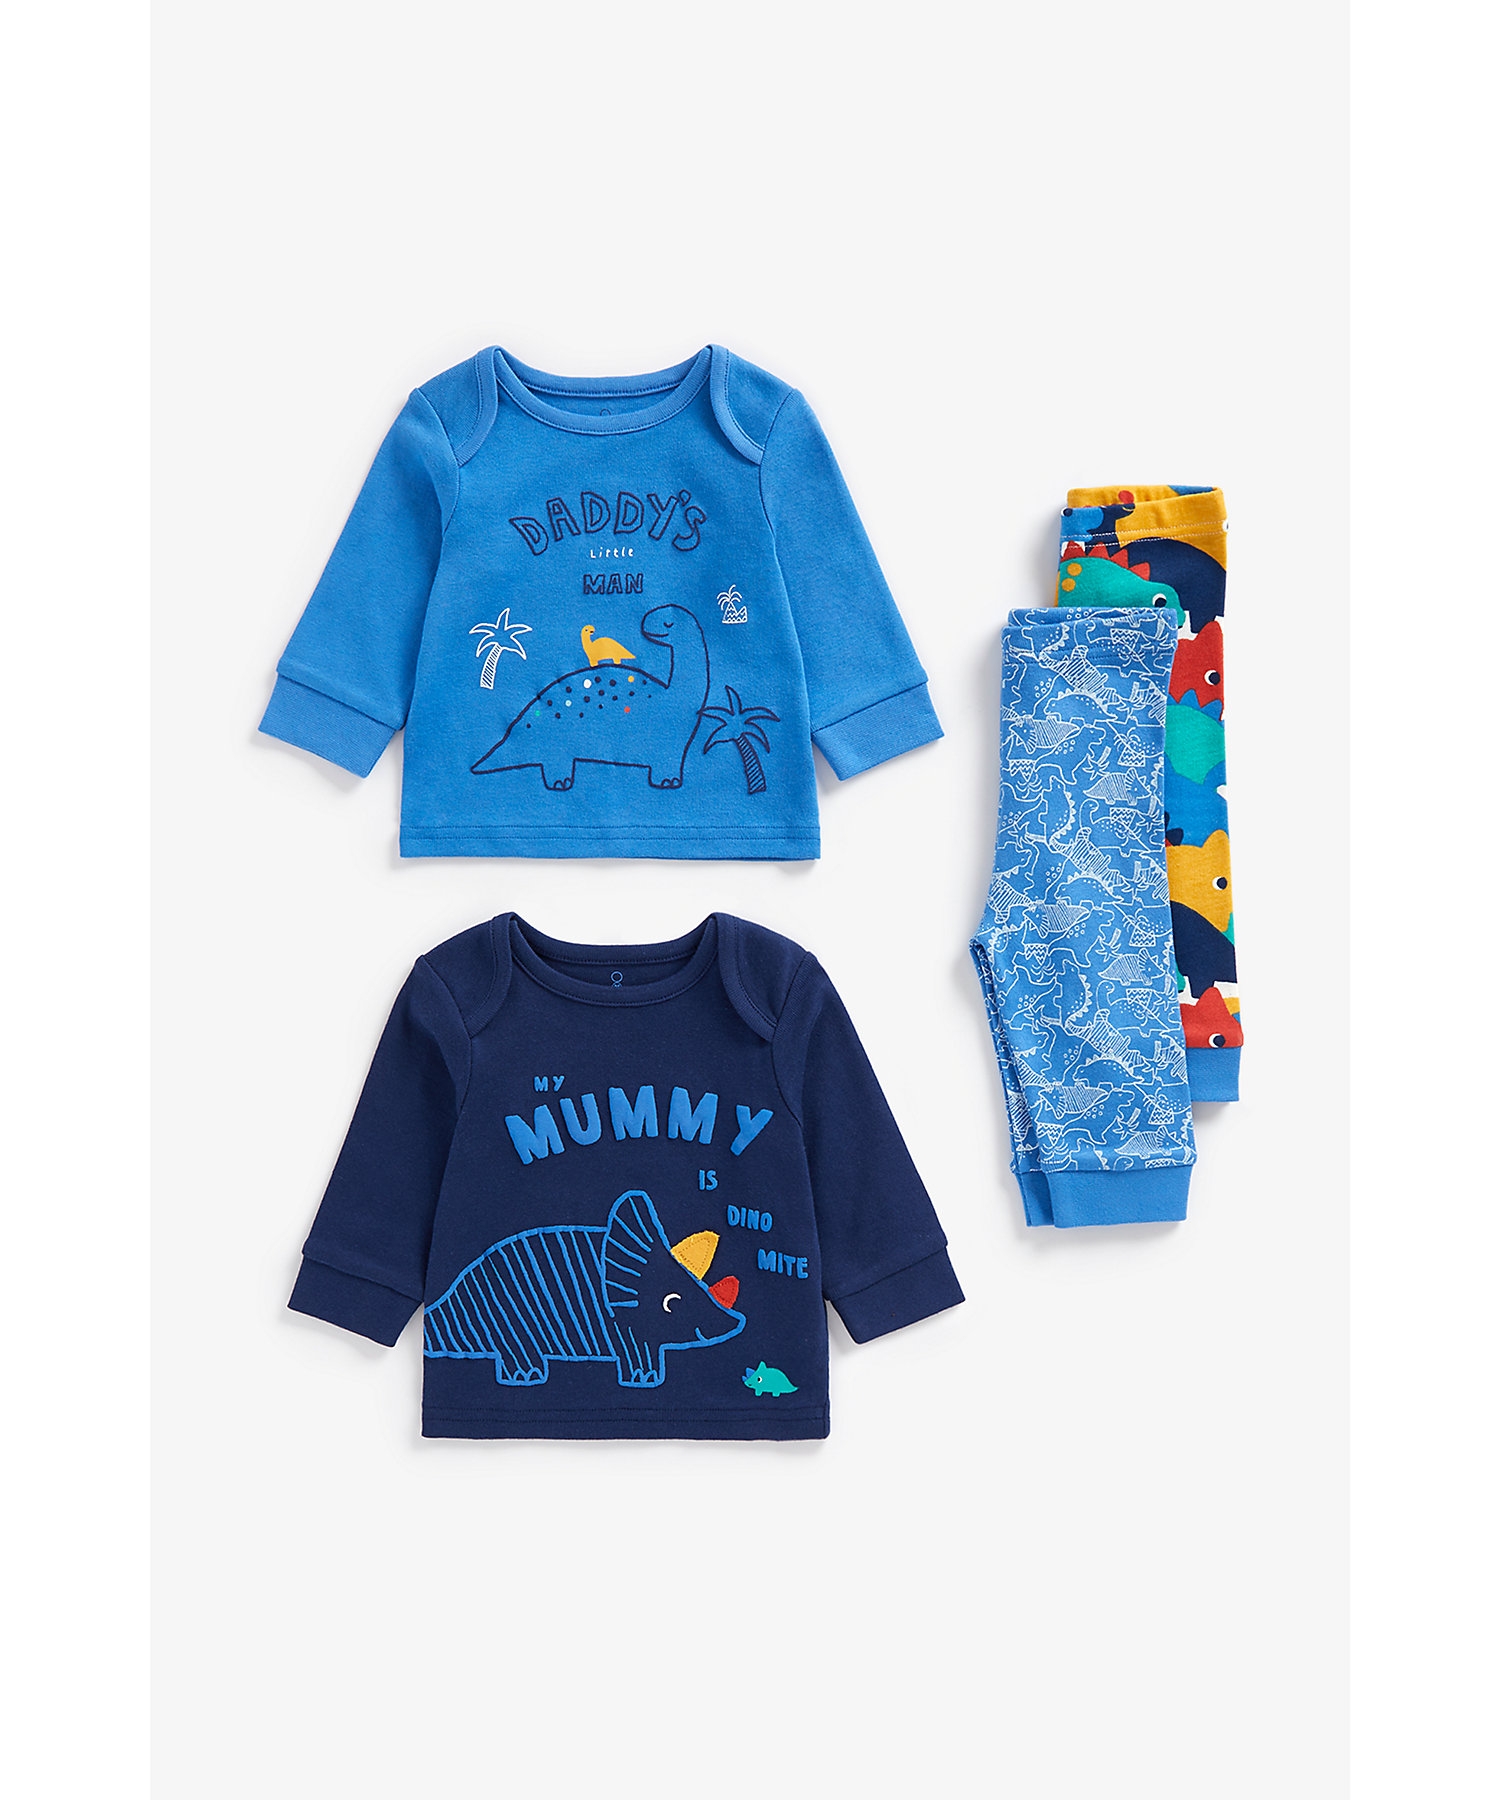 Boys Full Sleeves Pyjama Sets Dino Design-Pack of 2-Blue